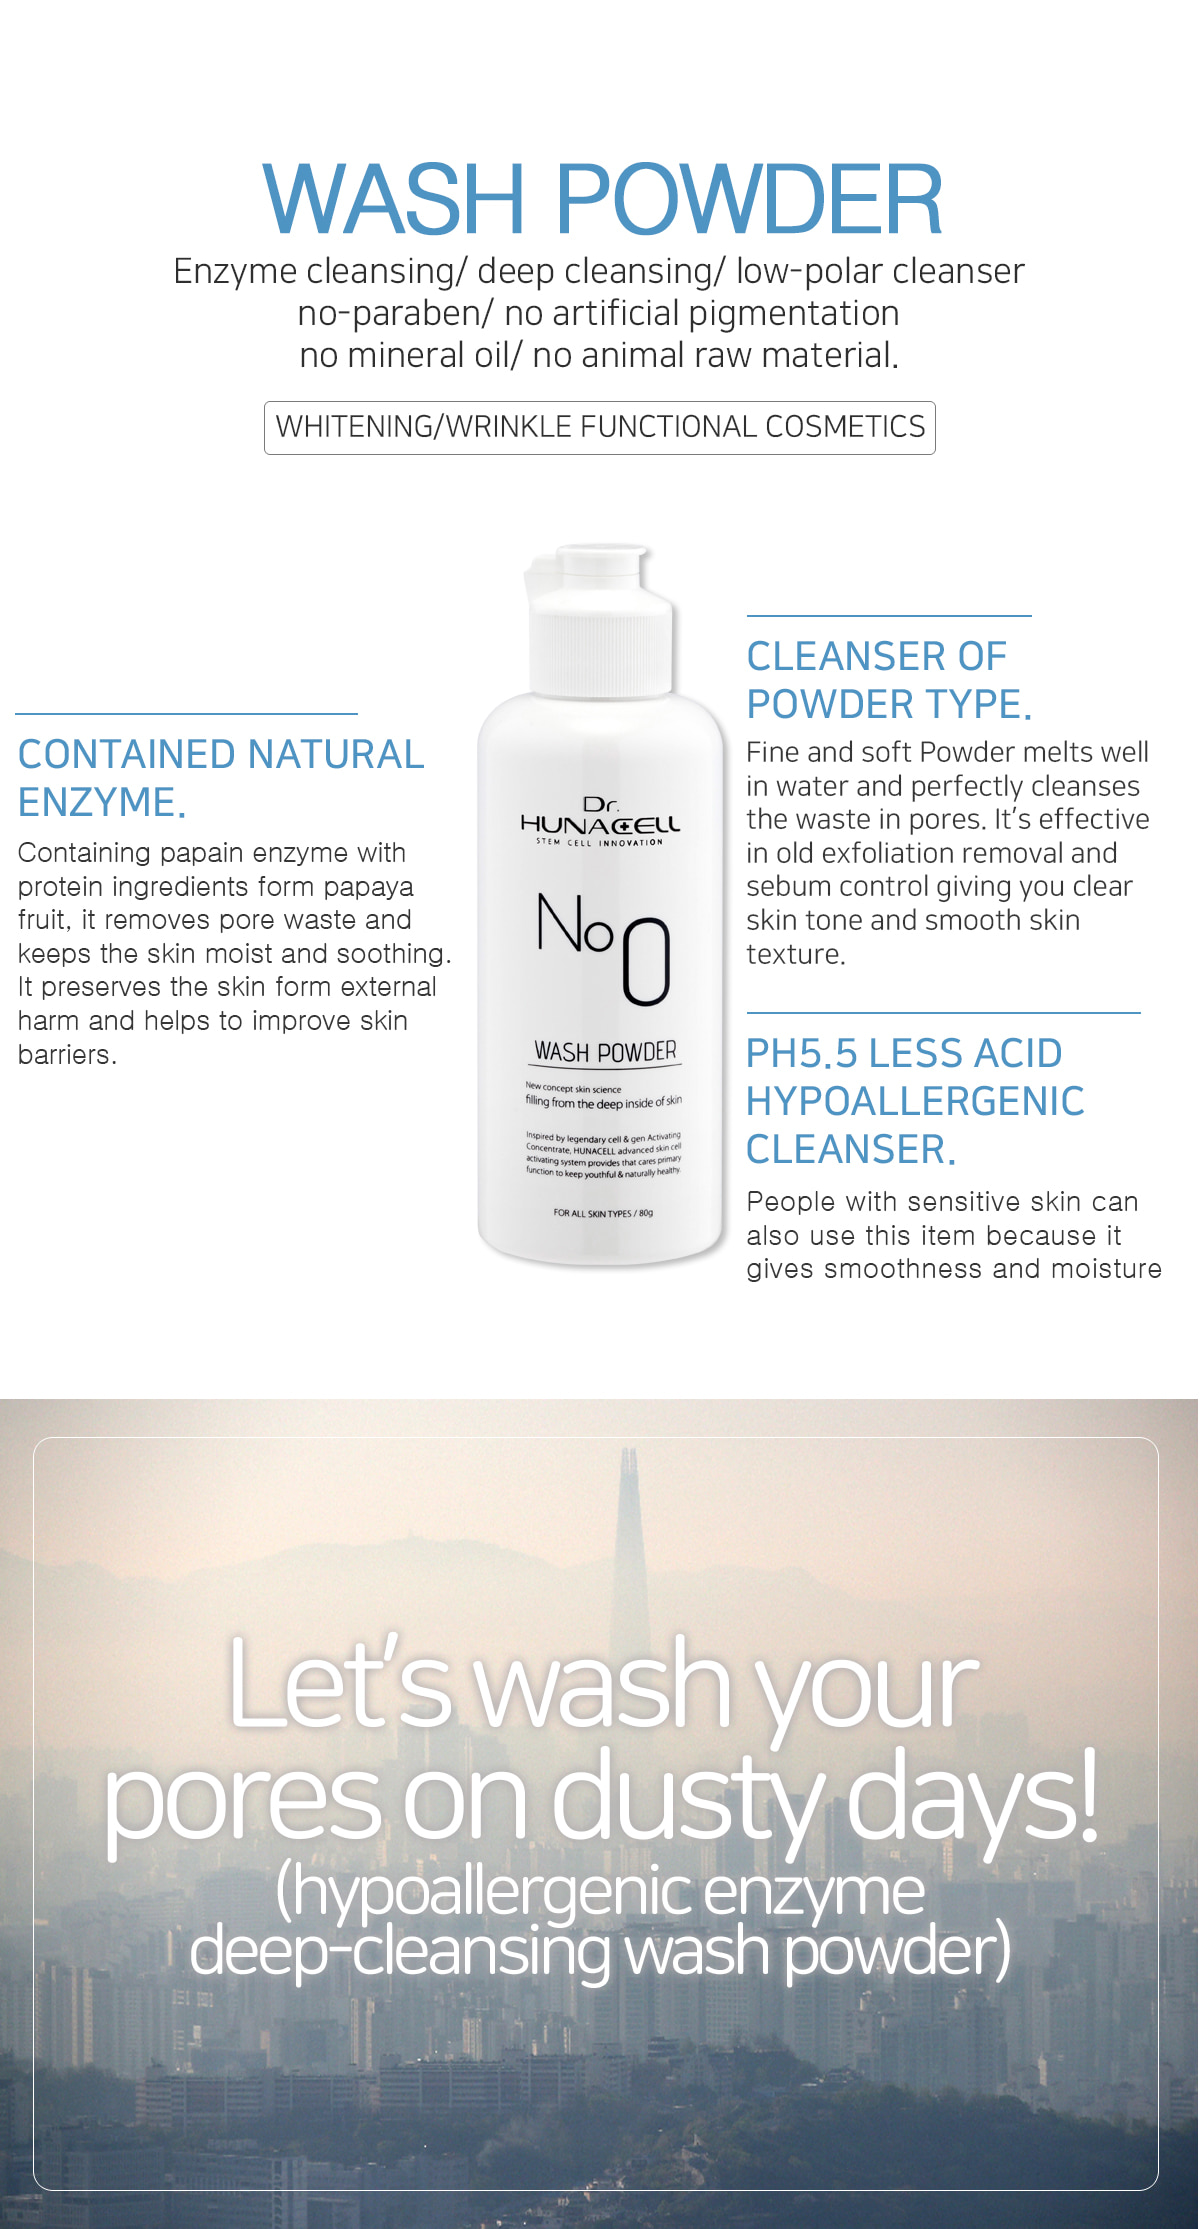 Dr.hunacell - Wash Powder (80g) X 100EA FOR B2B Skin care  Wash Powder  Moisturizing  Soothing